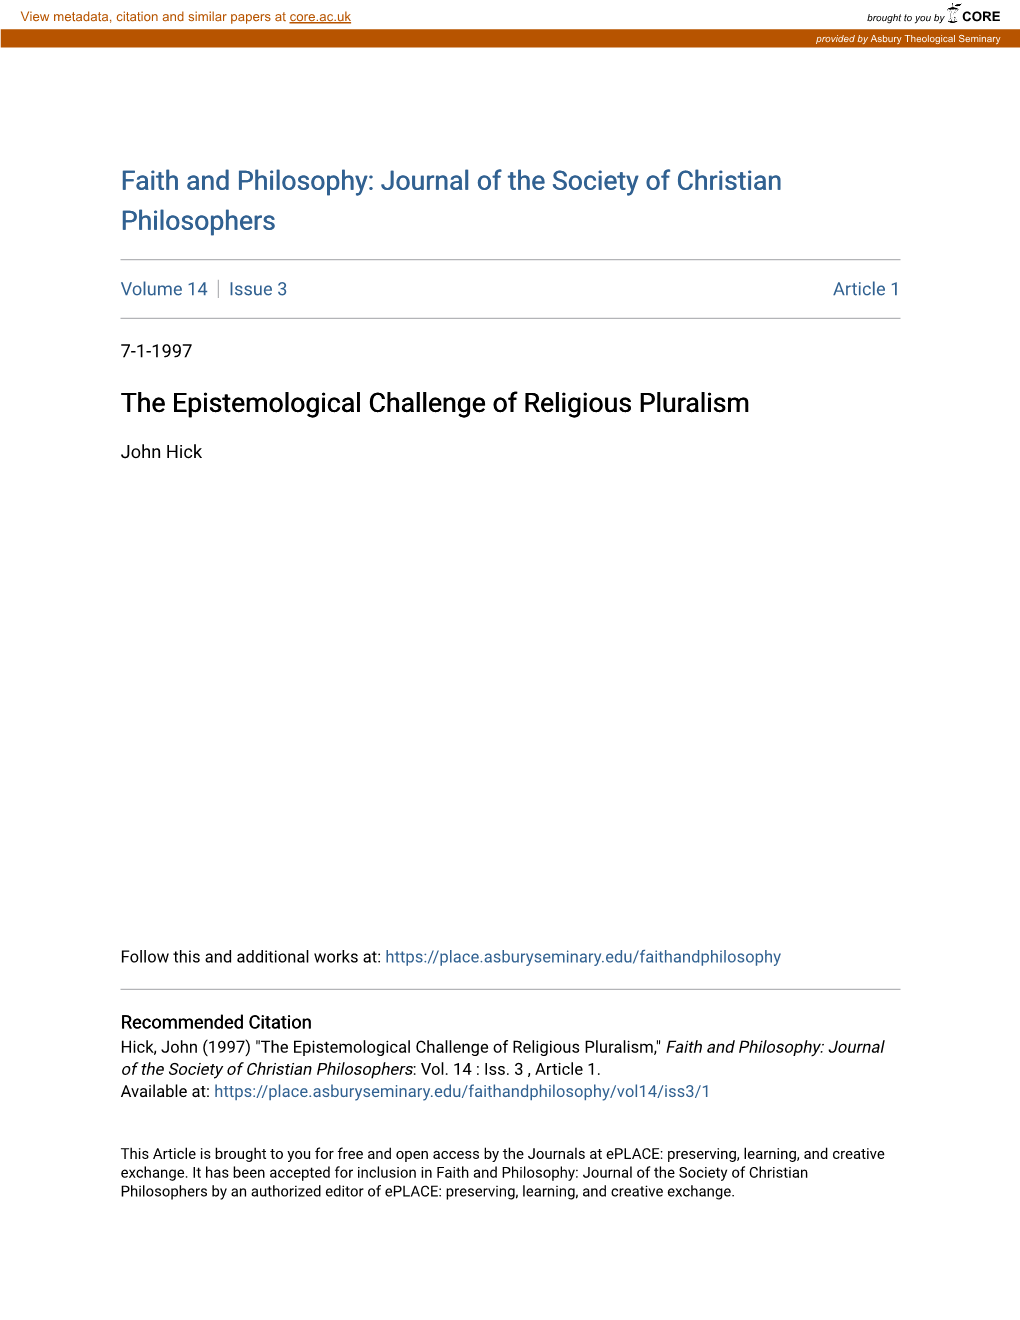 The Epistemological Challenge of Religious Pluralism